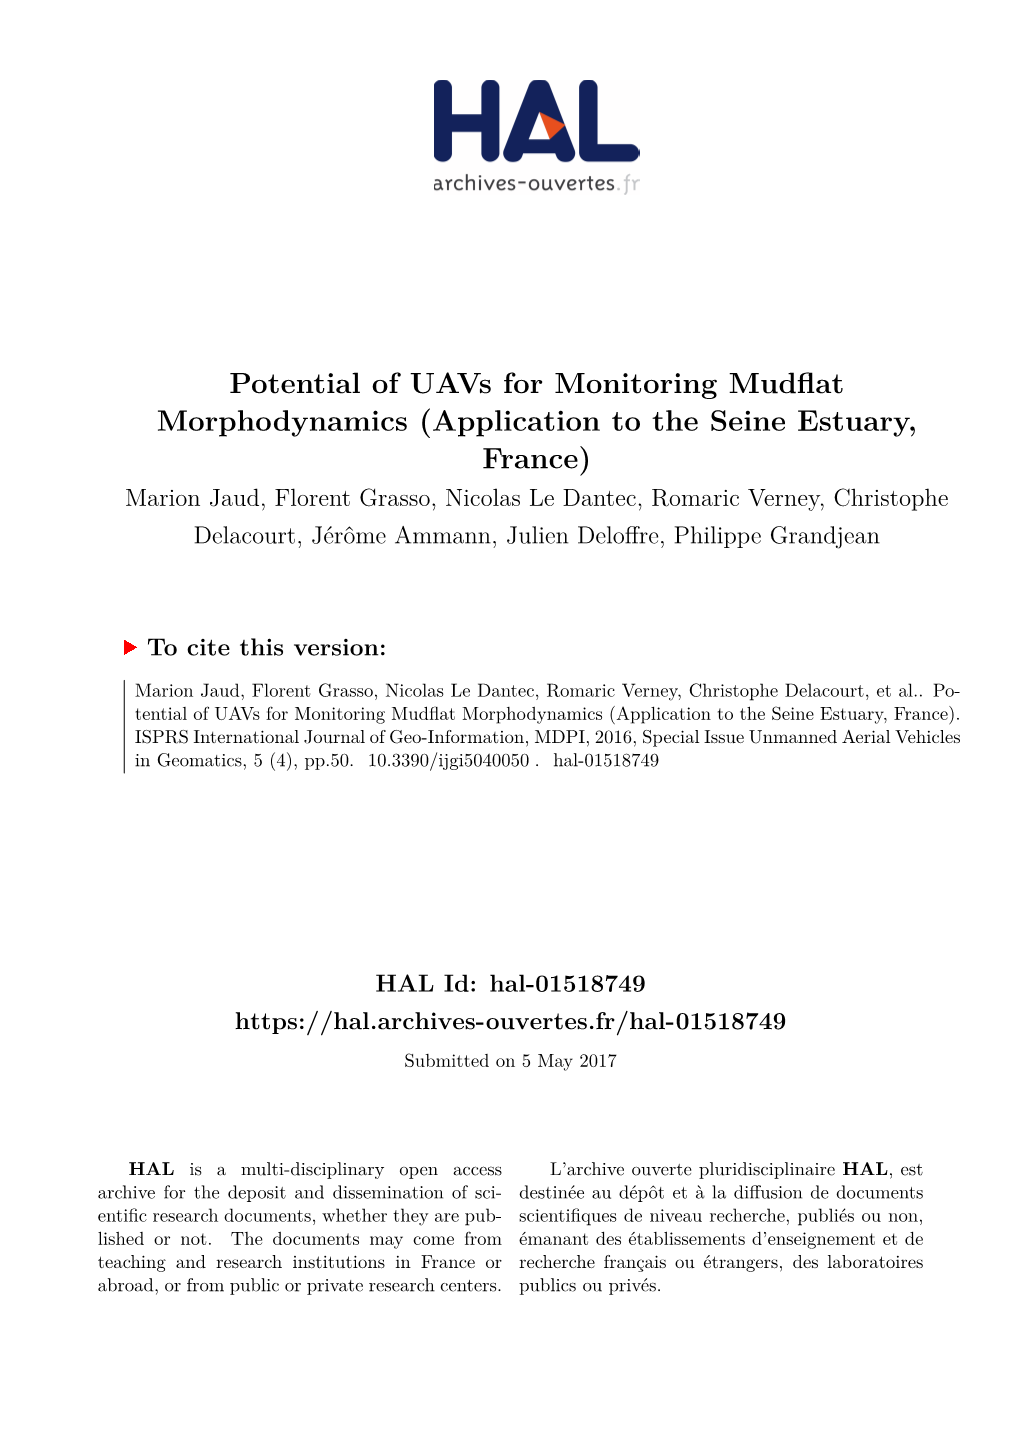 Potential of Uavs for Monitoring Mudflat Morphodynamics